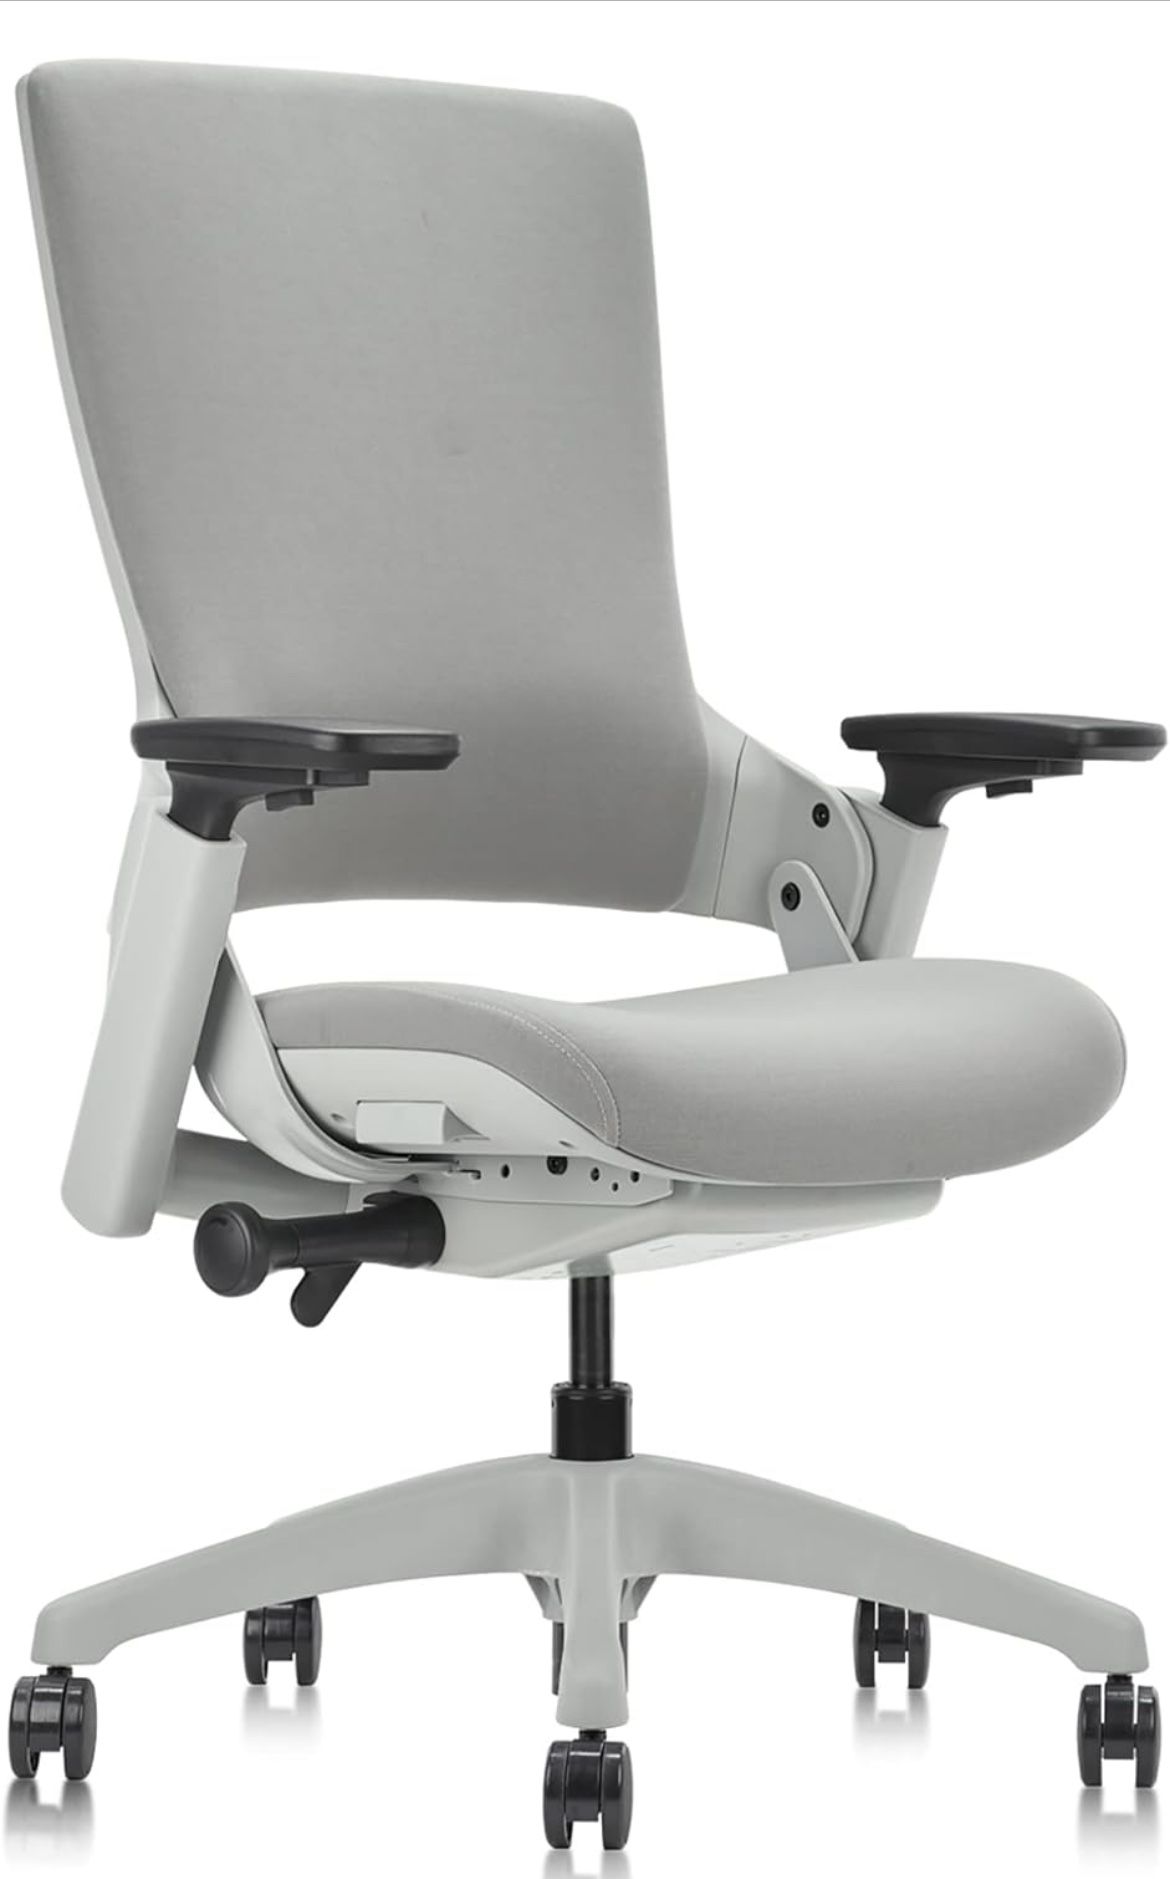 😀 Furniture of America Pro100 Ergonomic Upholstered High Back Fully Adjustable Swivel Office Chair